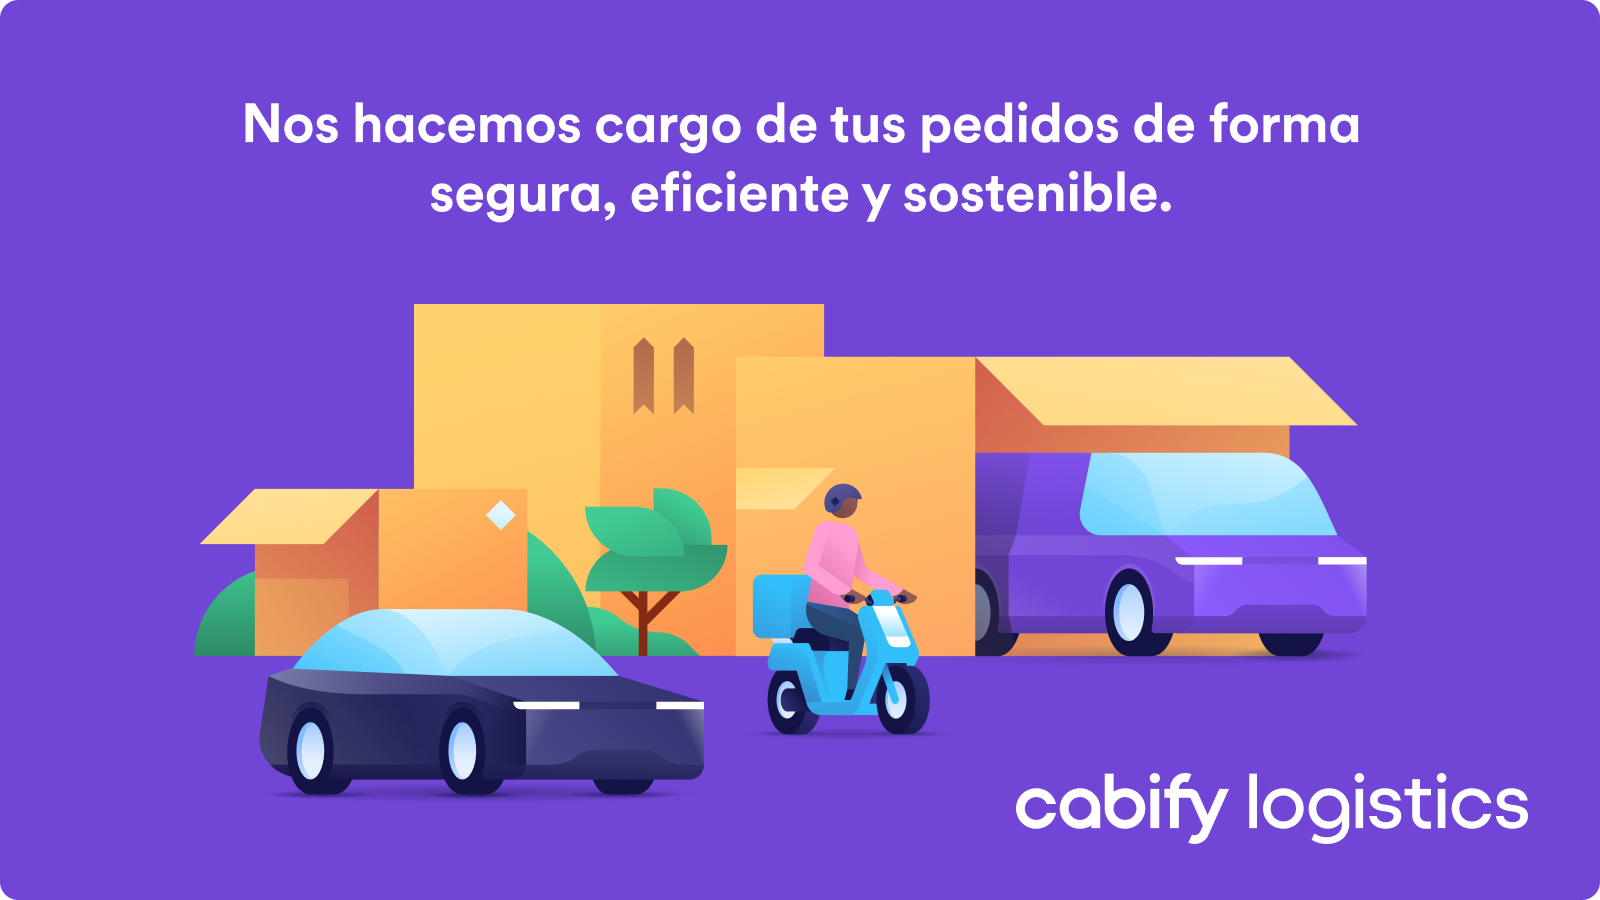 Cabify Logistics en Shopify